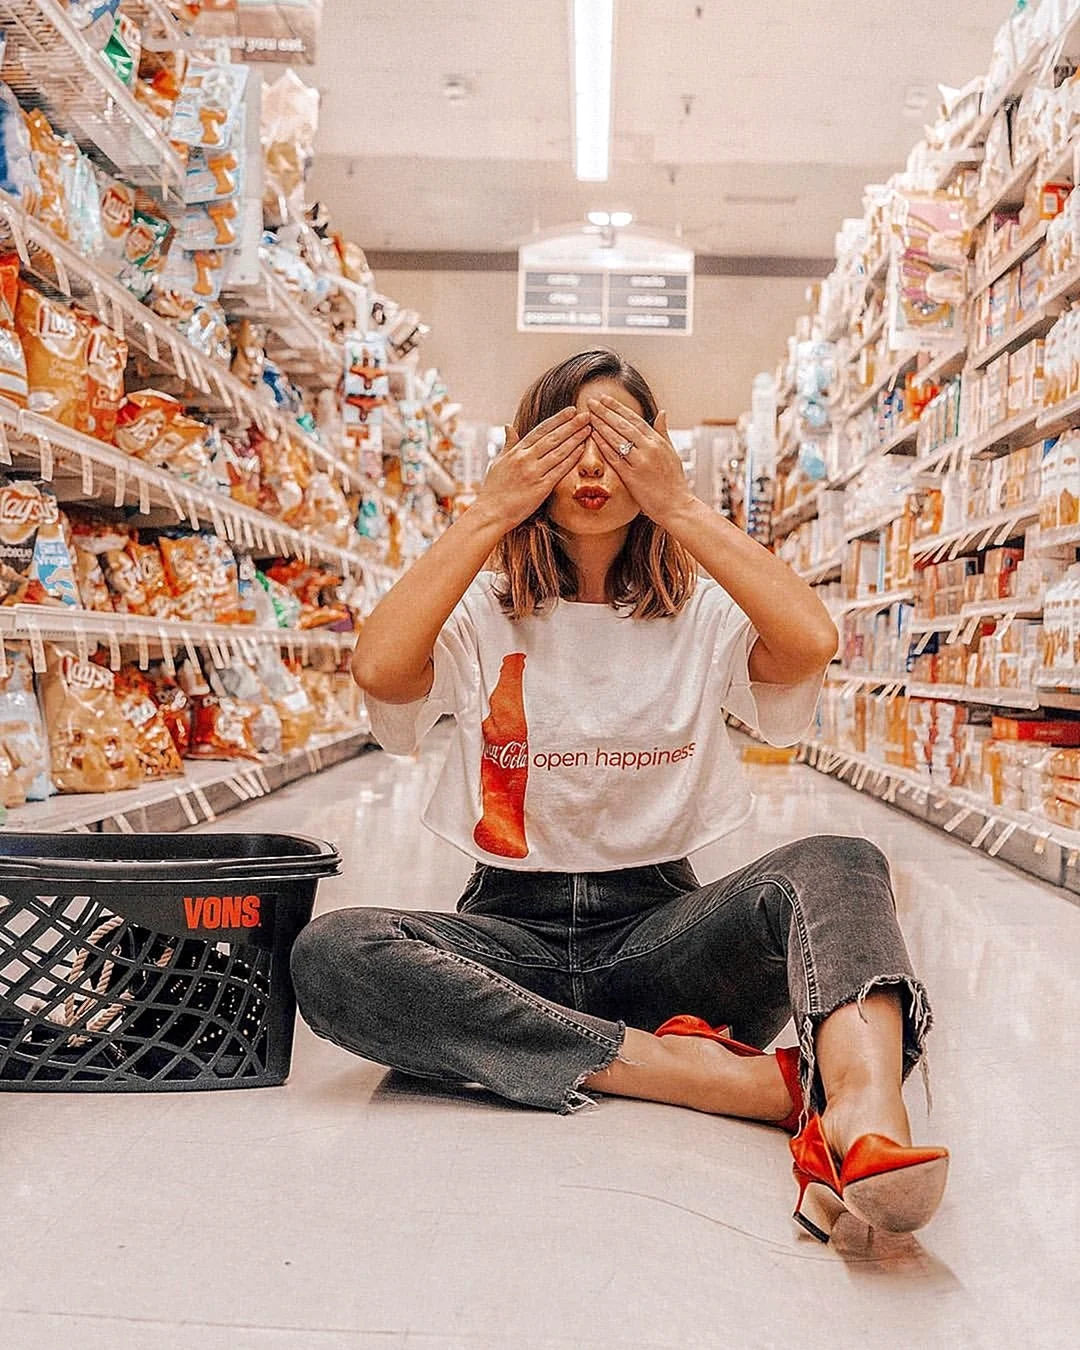 Девушка в супермаркете